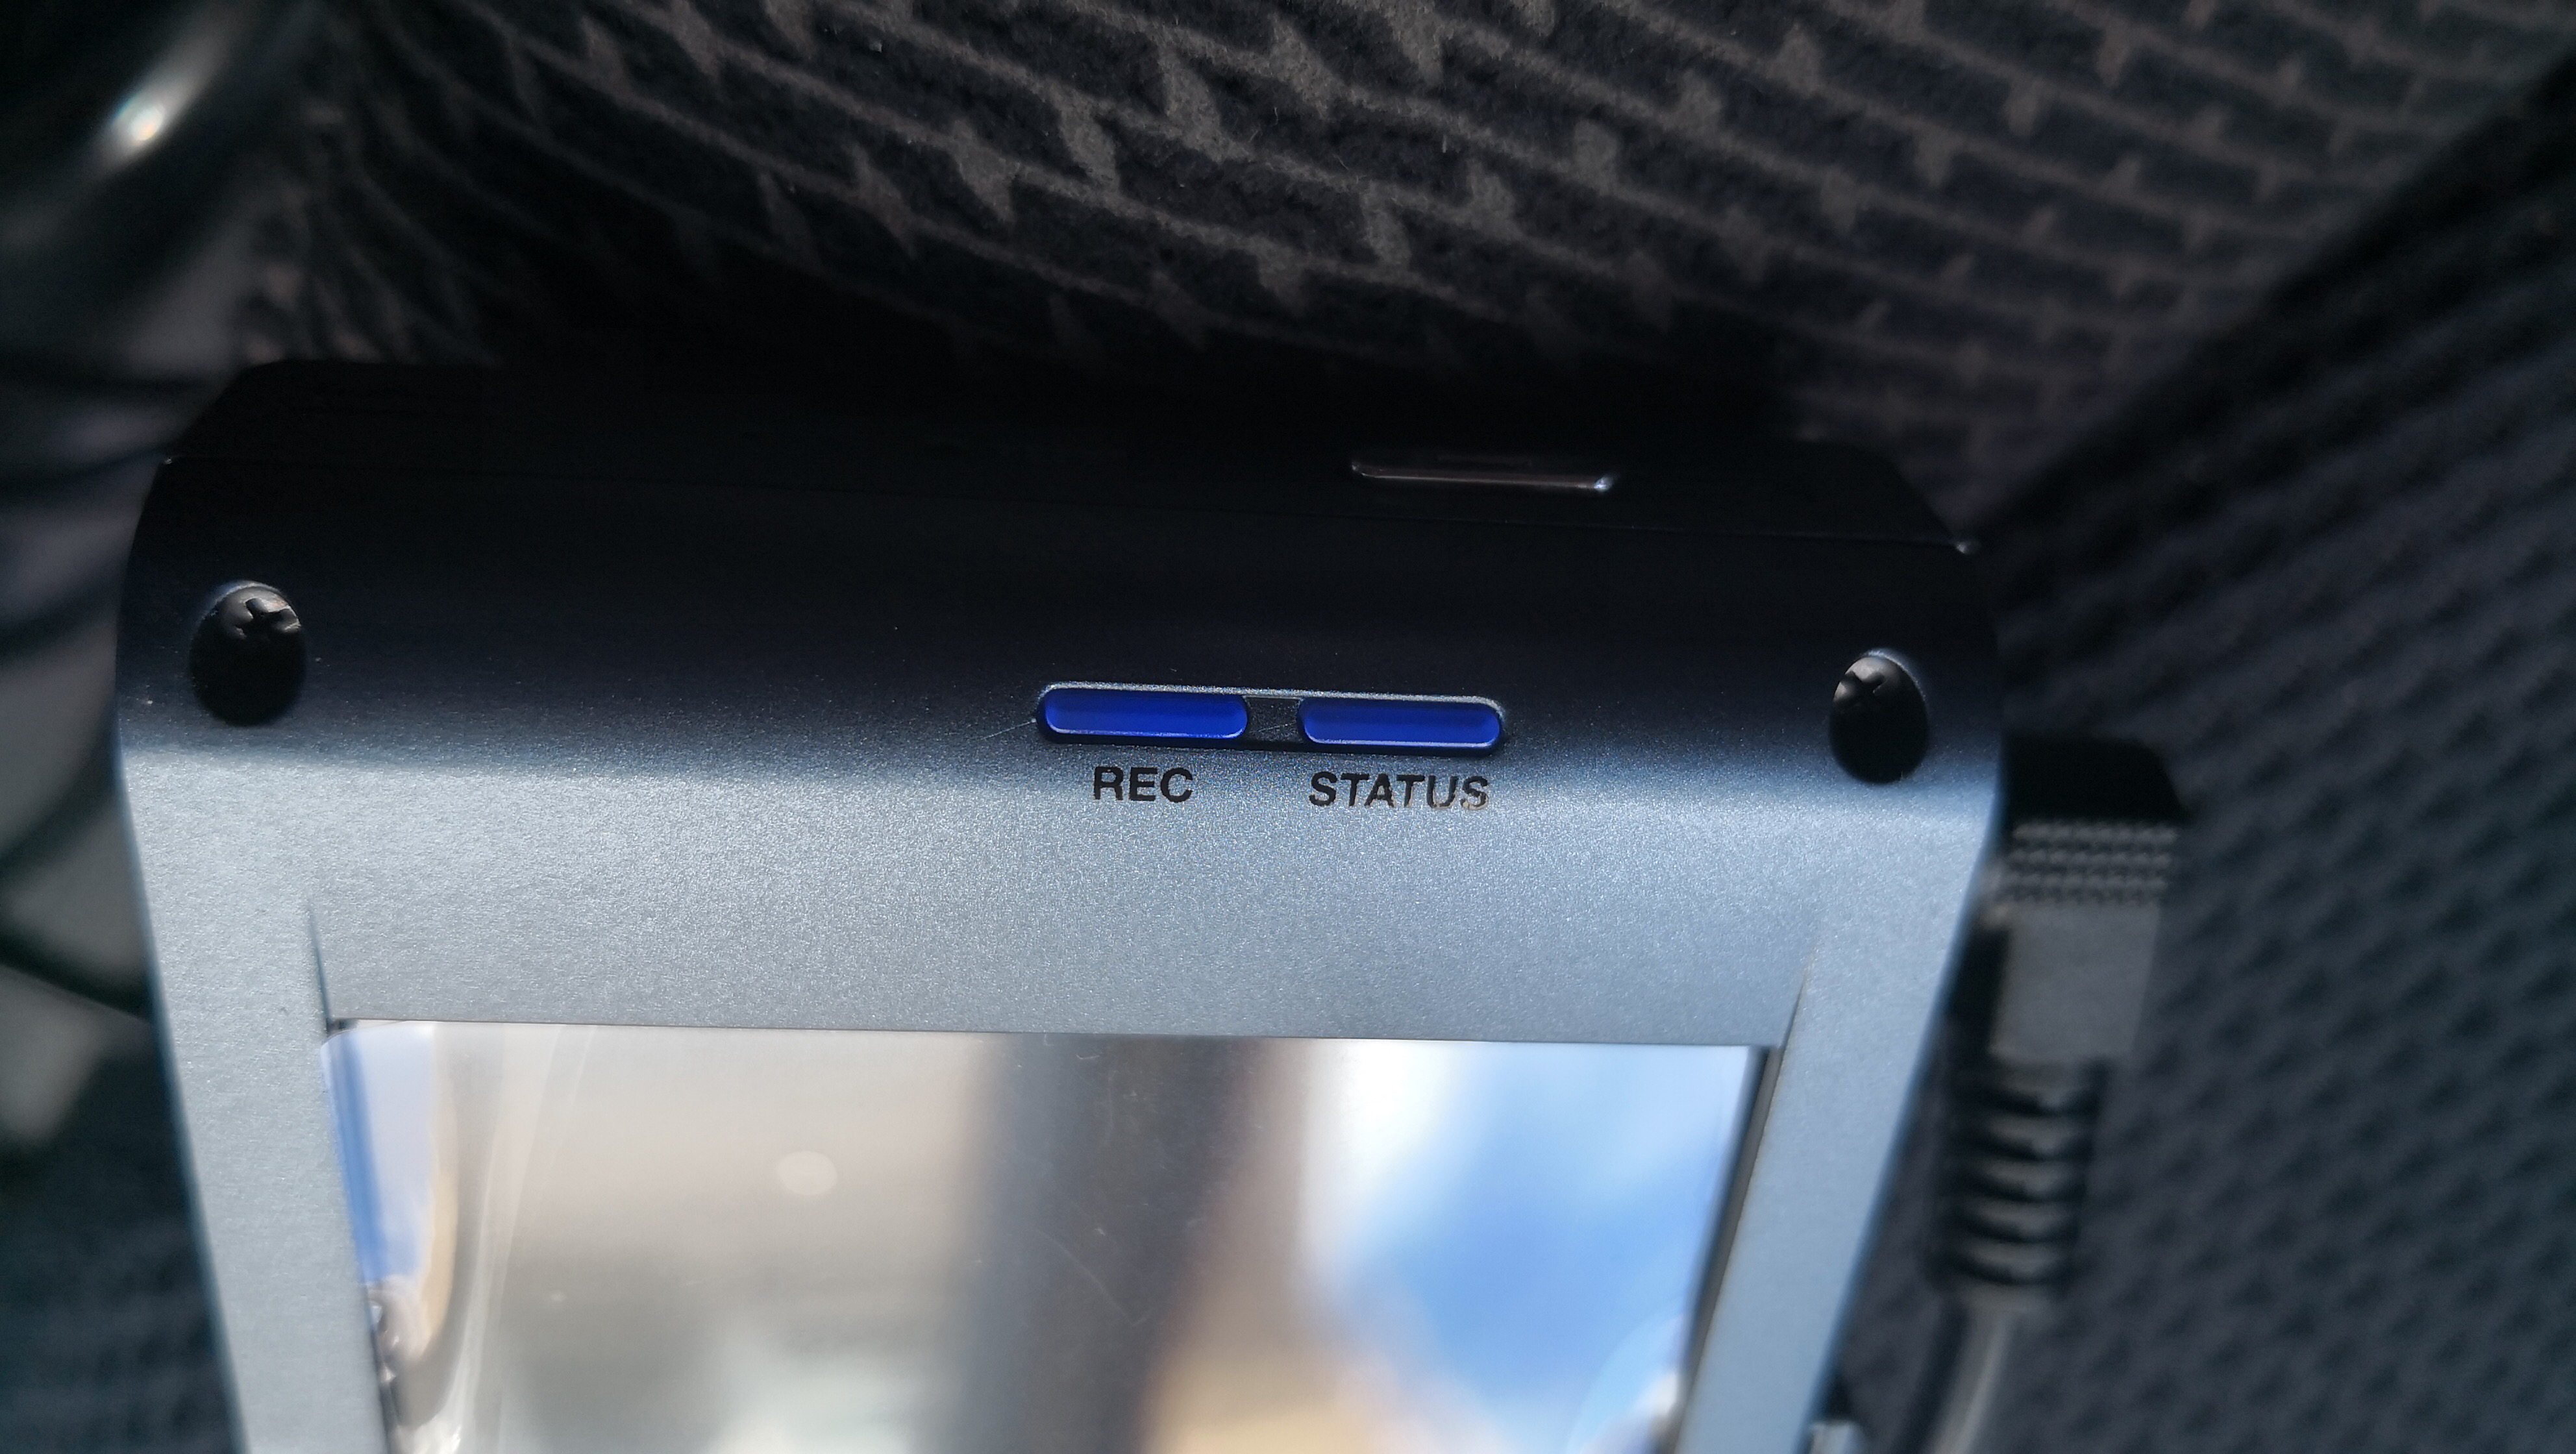 The Thinkware X1000 dash cam sitting on a car seat